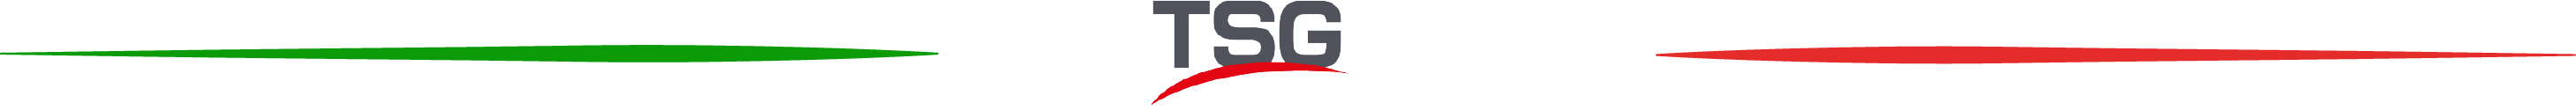 TSG services